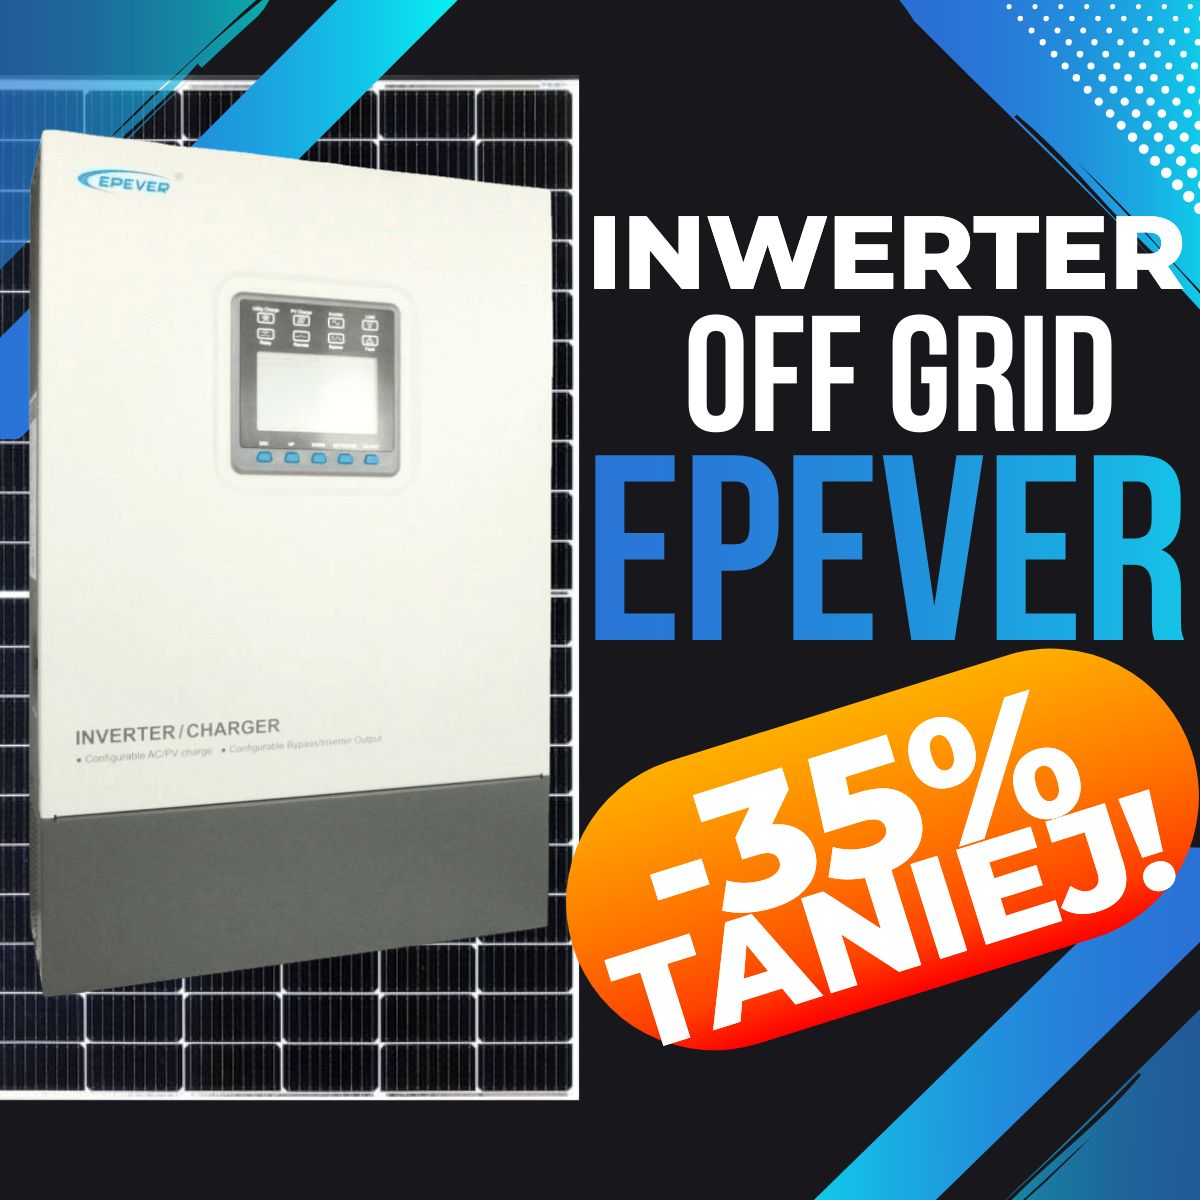 Inwerter Epever 5kW off grid 35% TANIEJ!